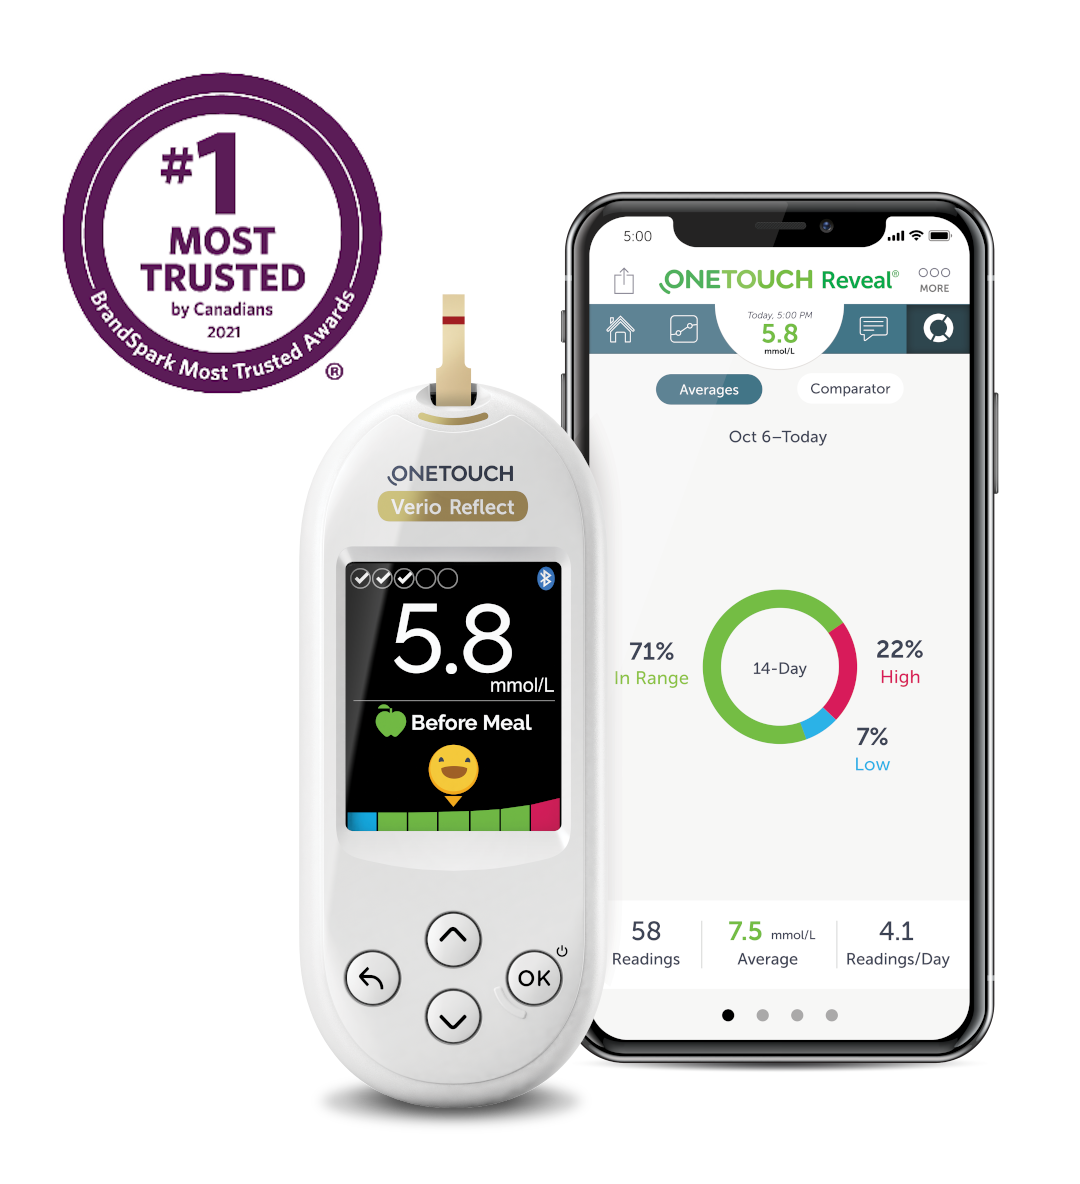 Mobile glucose monitoring